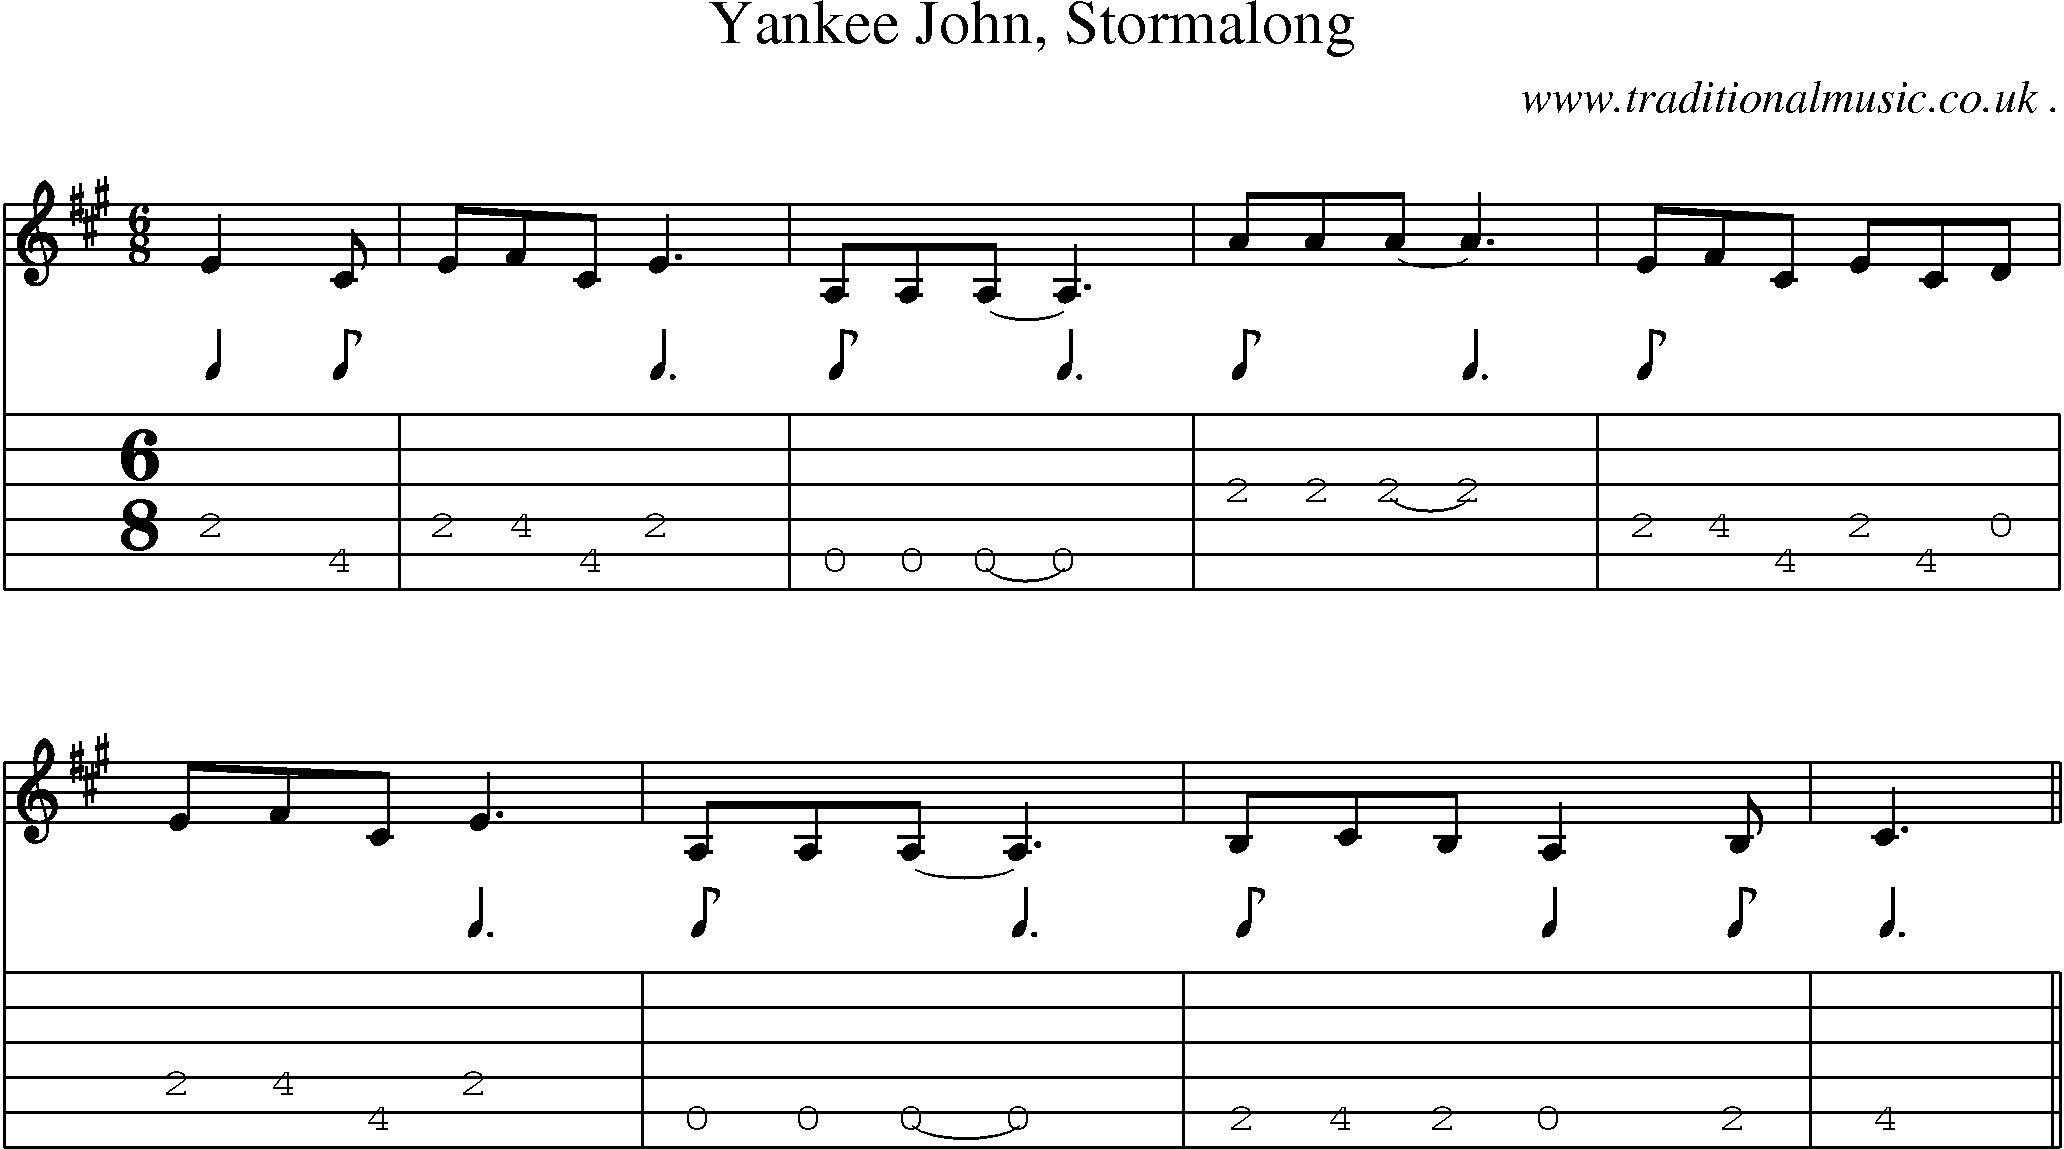 Sheet-Music and Guitar Tabs for Yankee John Stormalong